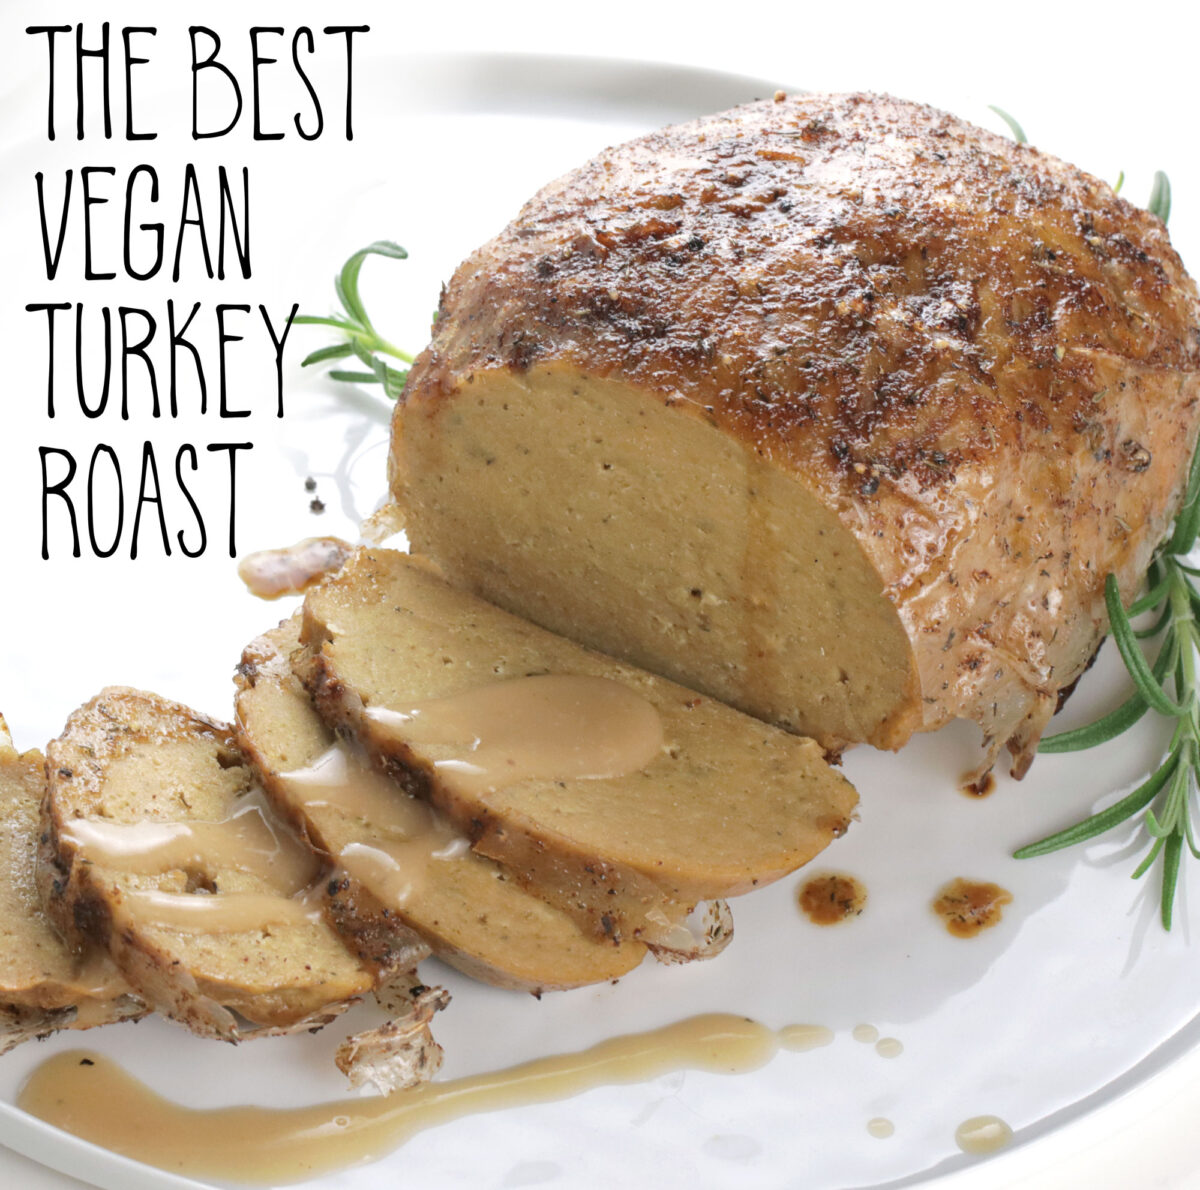 The Best Vegan Turkey Roast